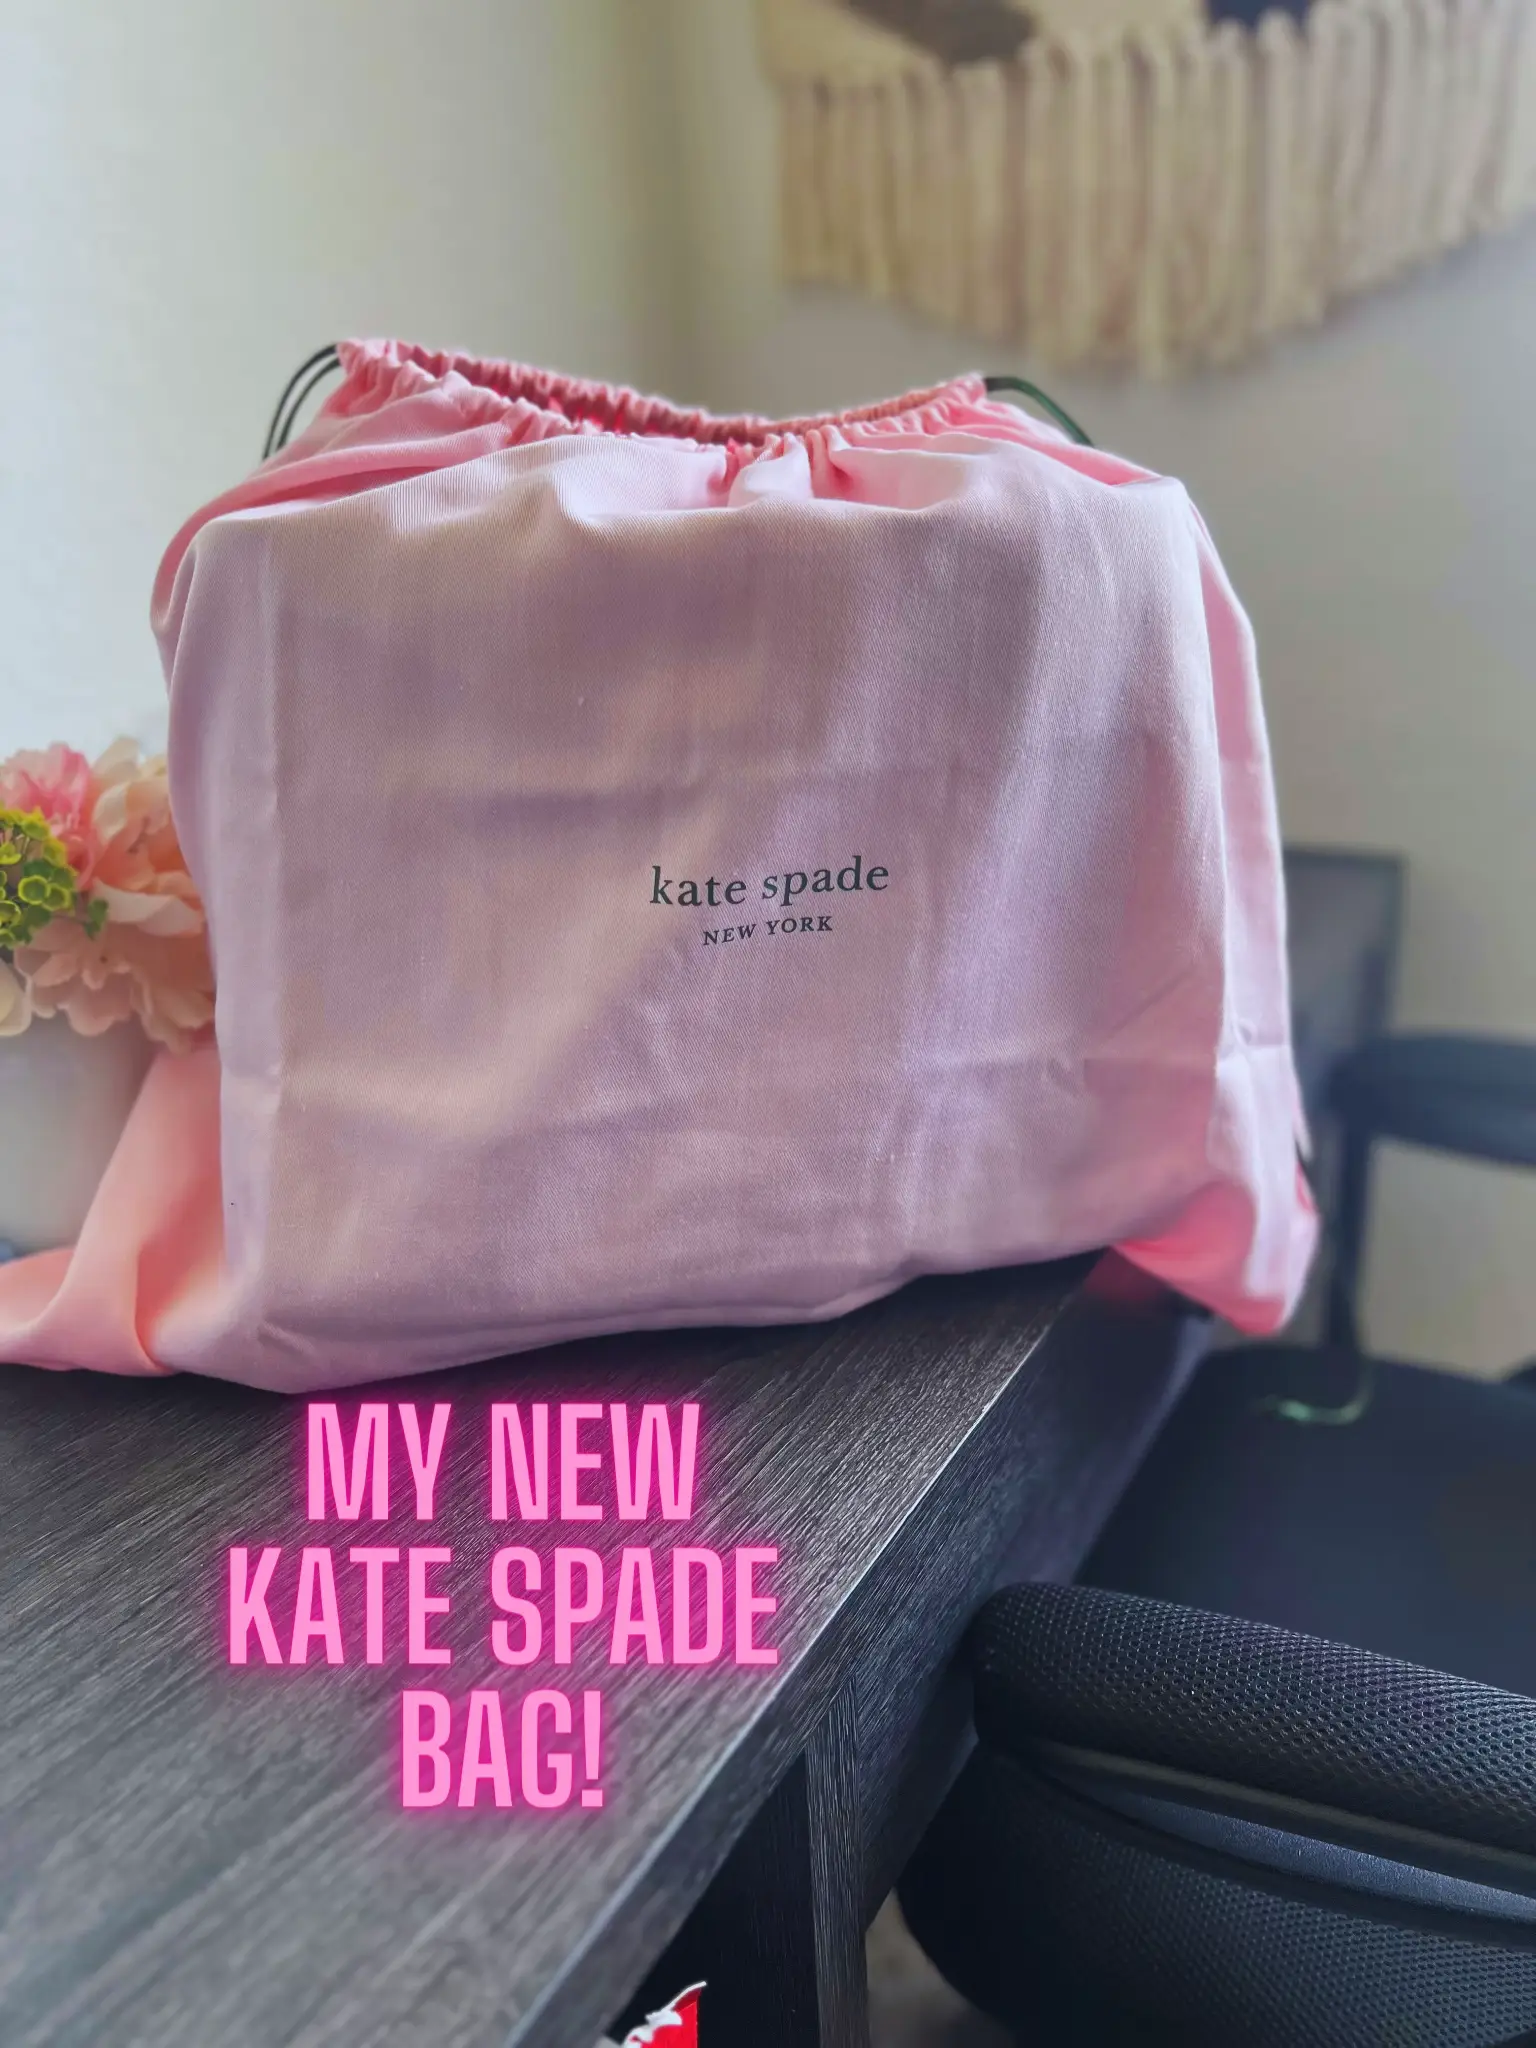 Get Juicy With Kate Spade's Lemon Bags For Summer - BAGAHOLICBOY